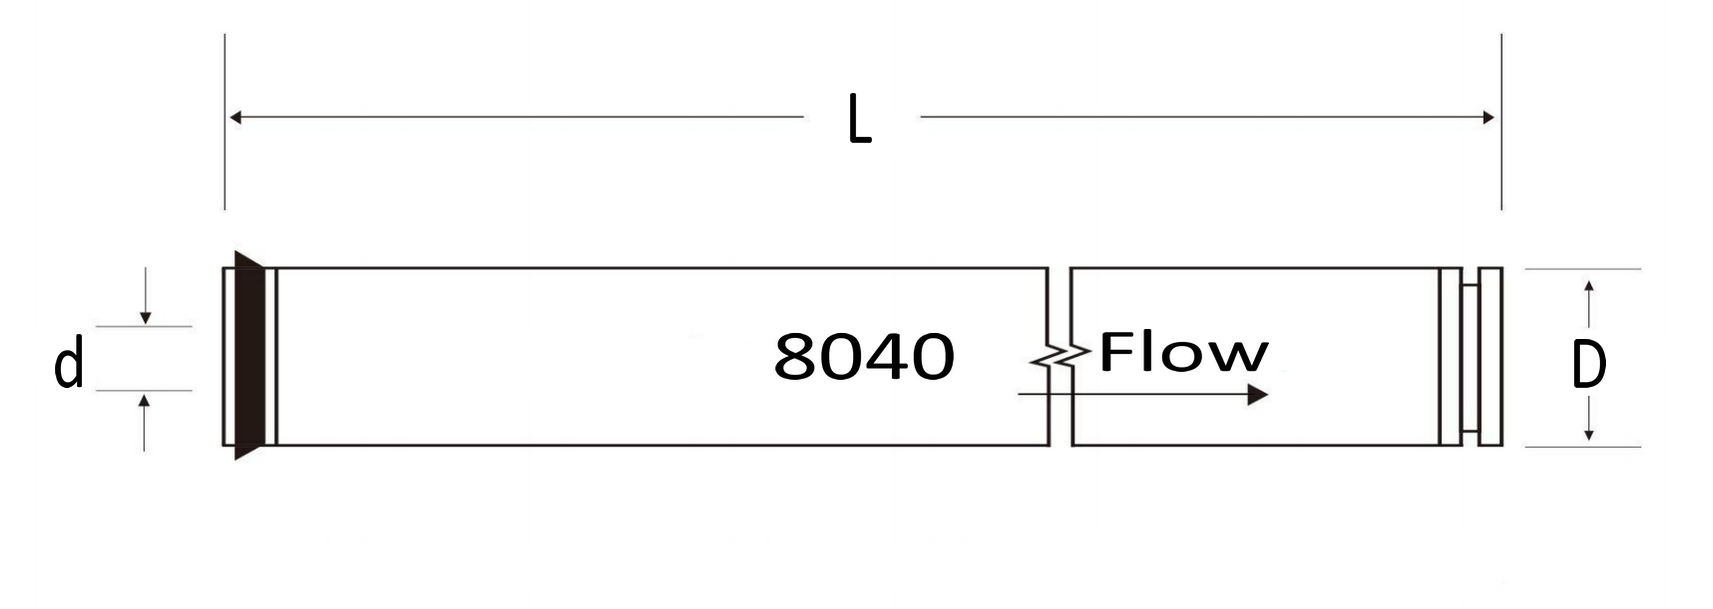 Hydranautics ESPA4-LD-8040 Equivalent RO Membrane Element Dimensions